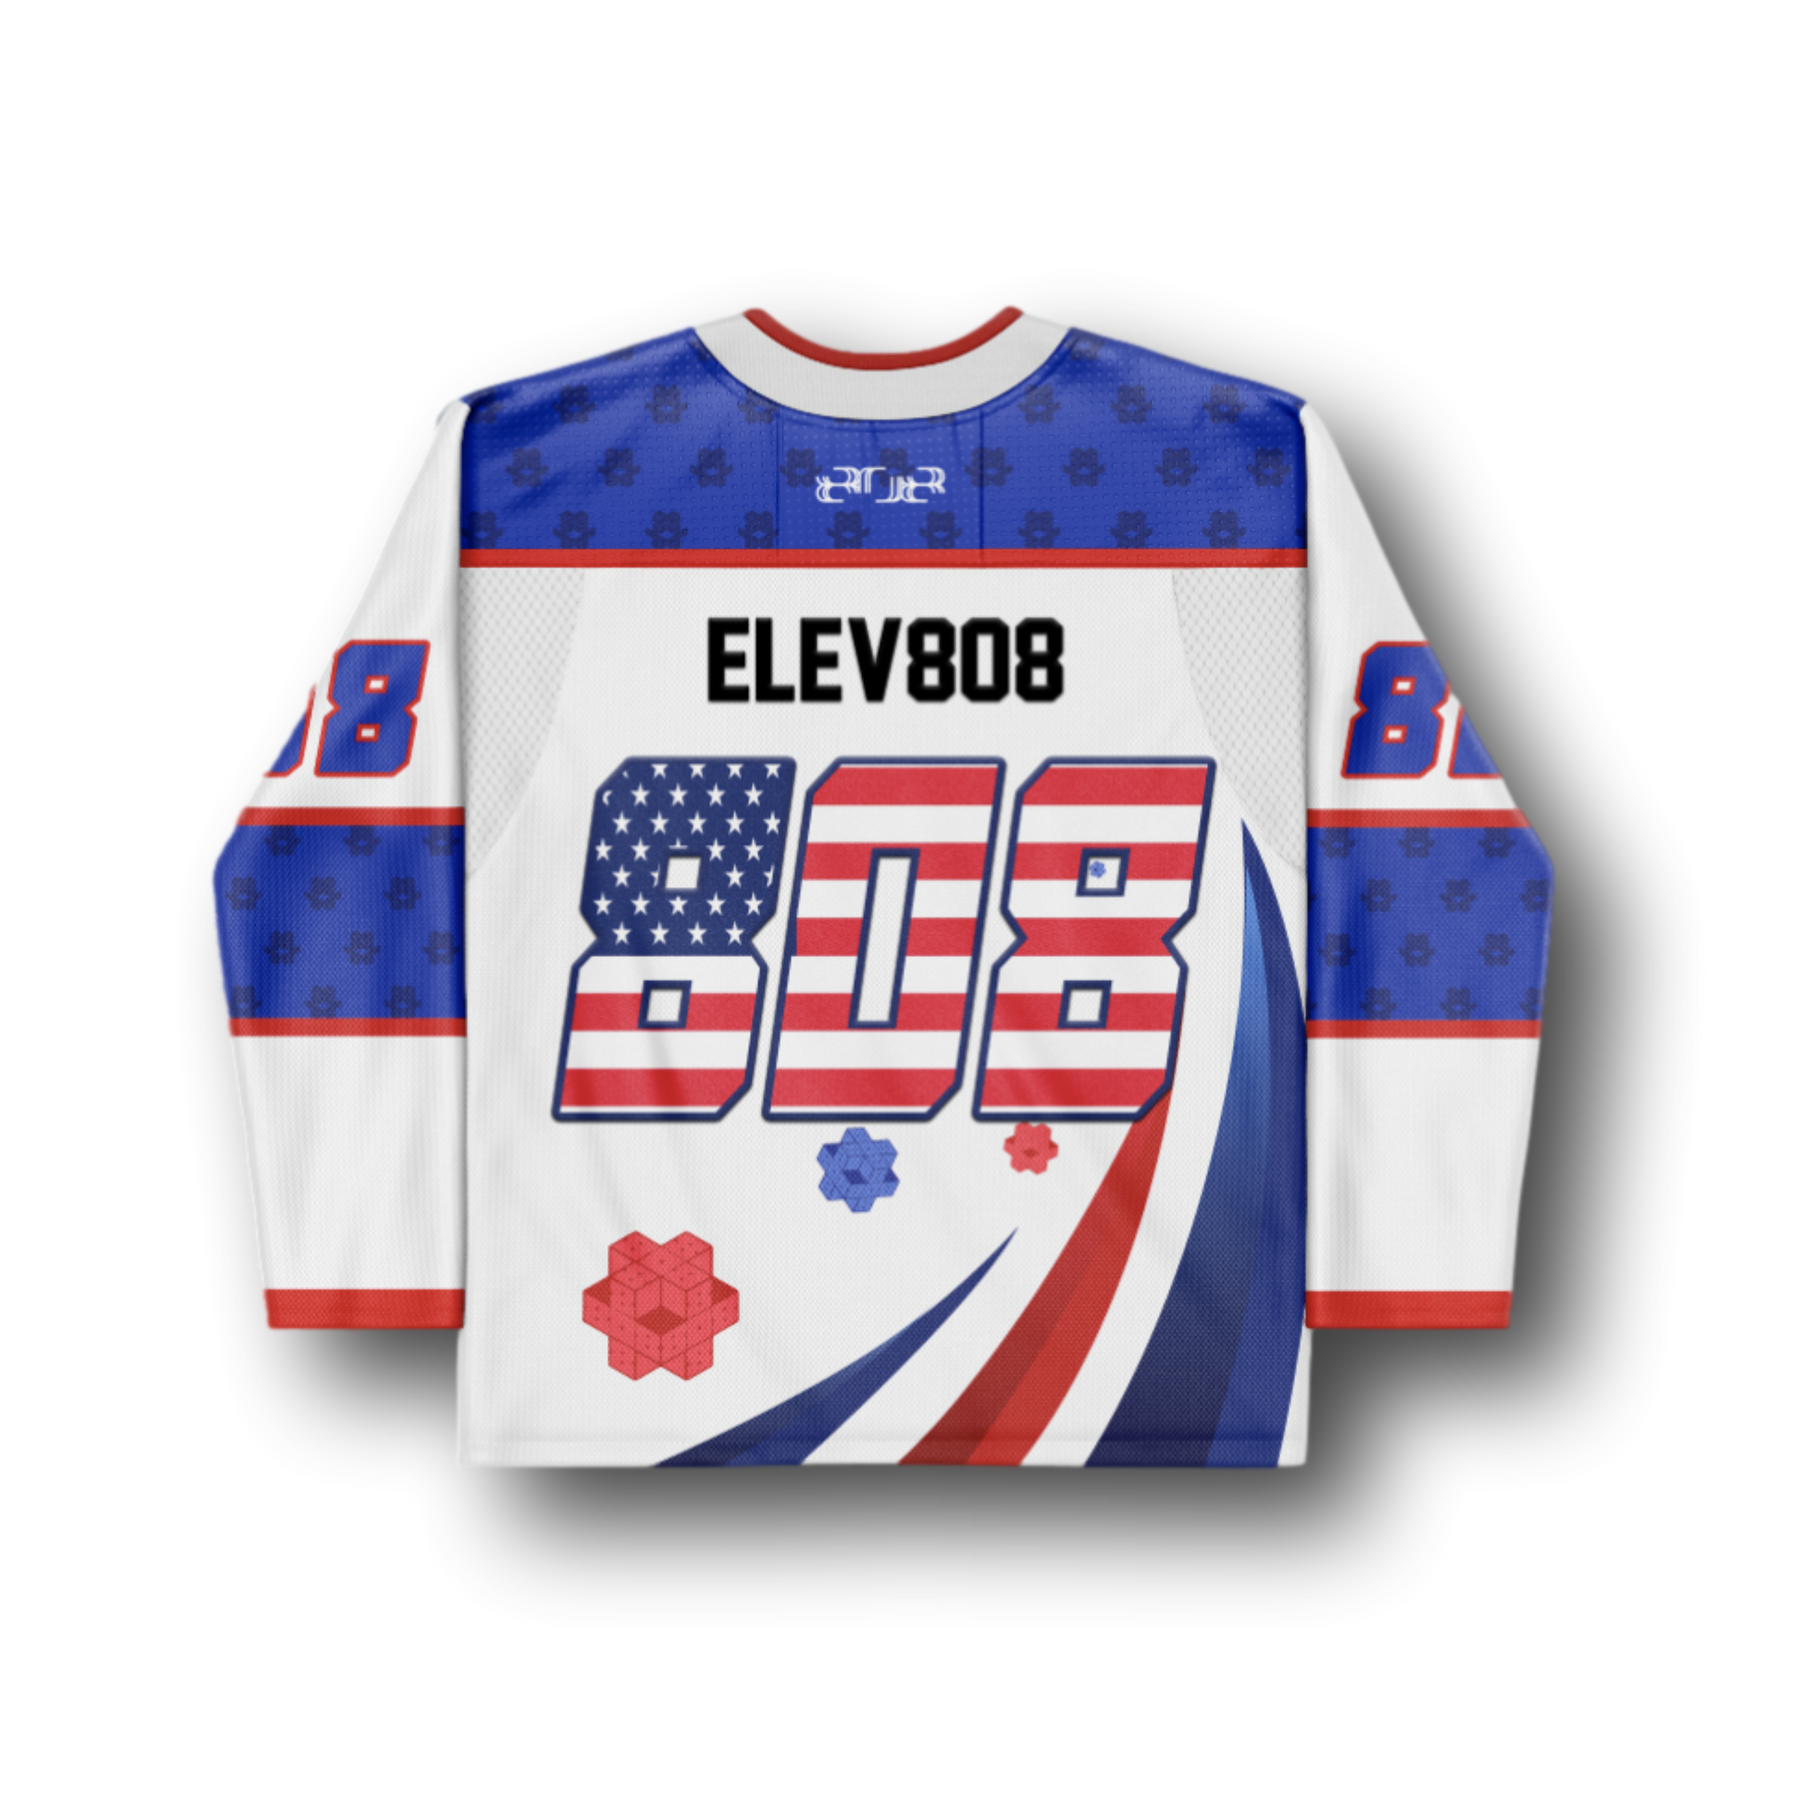 USA 808 White Hockey Jersey - LE75